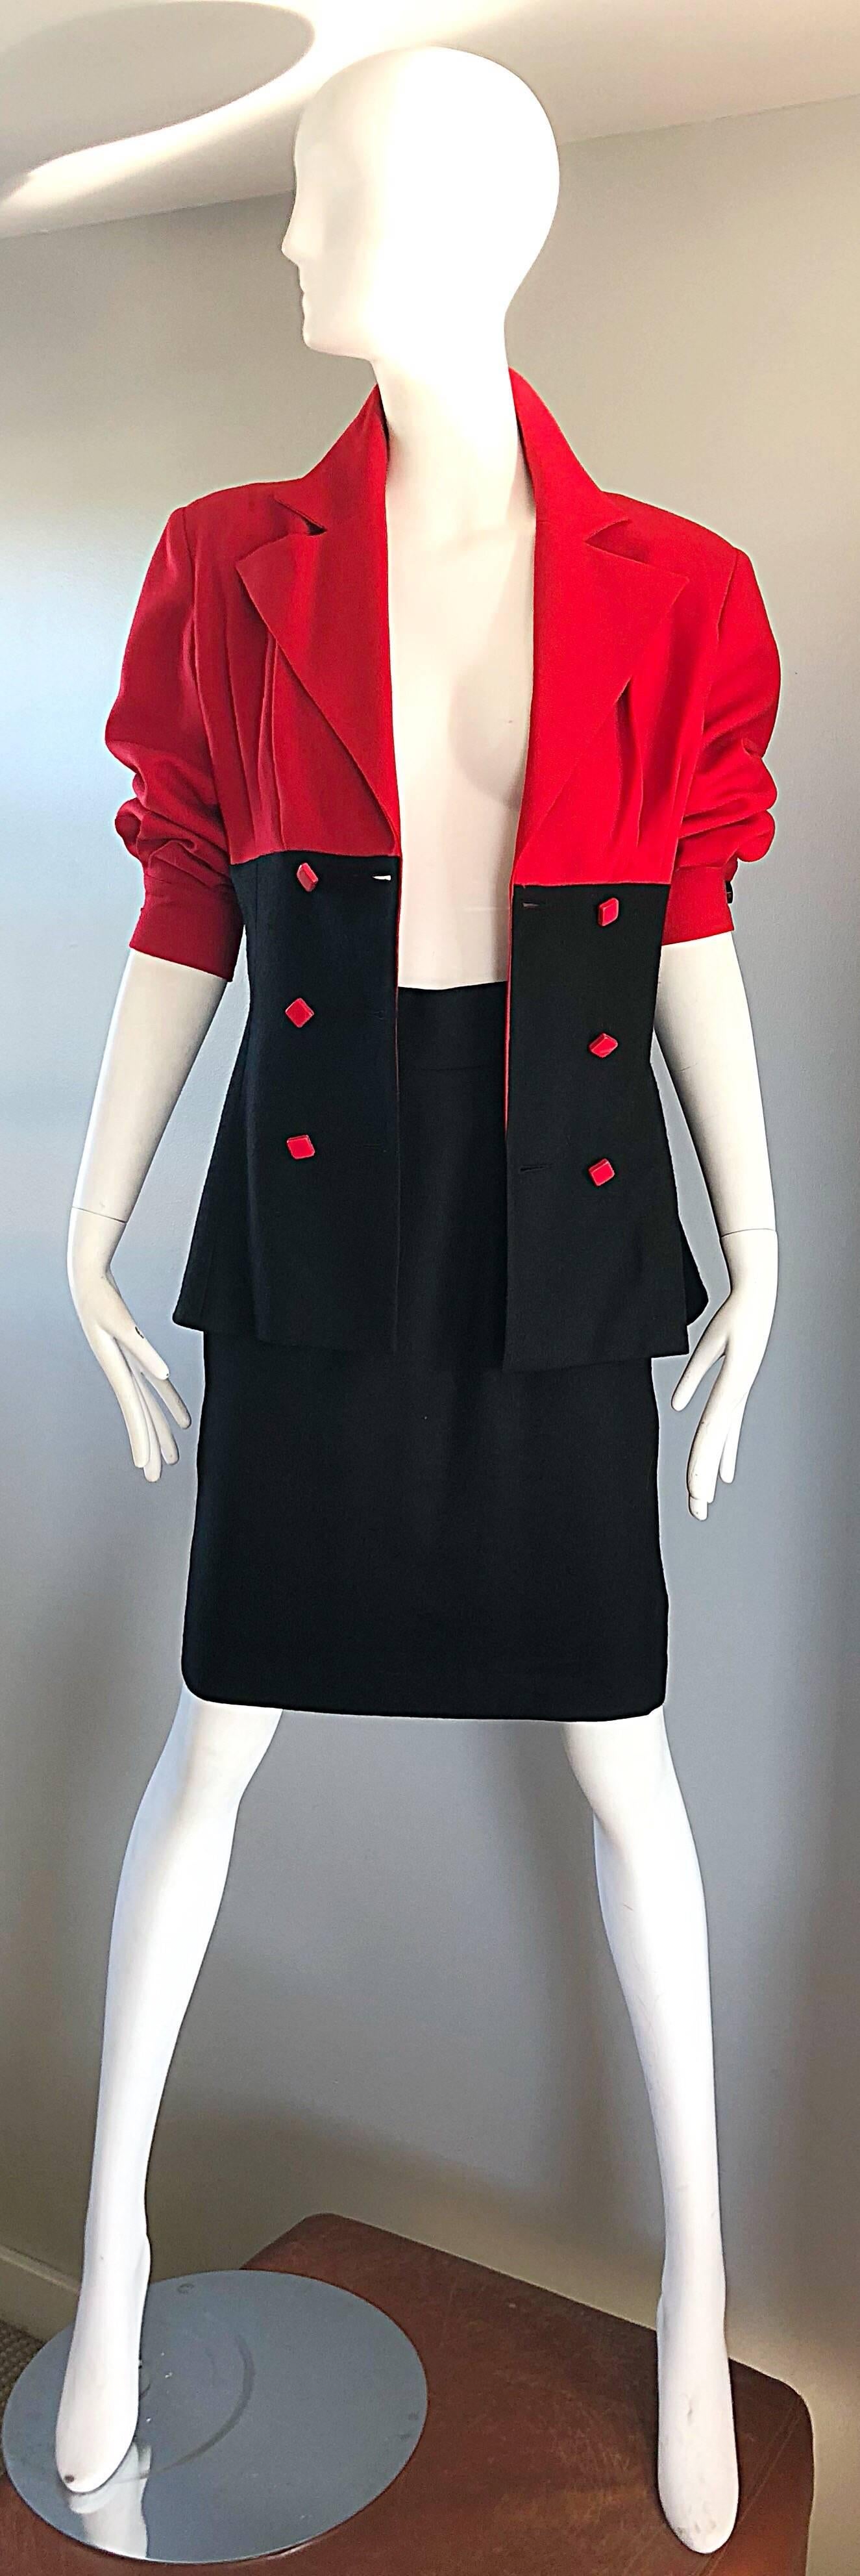 Women's Patrick Kelly Vintage Lipstick Red and Black Color Block Avant Garde Skirt Suit